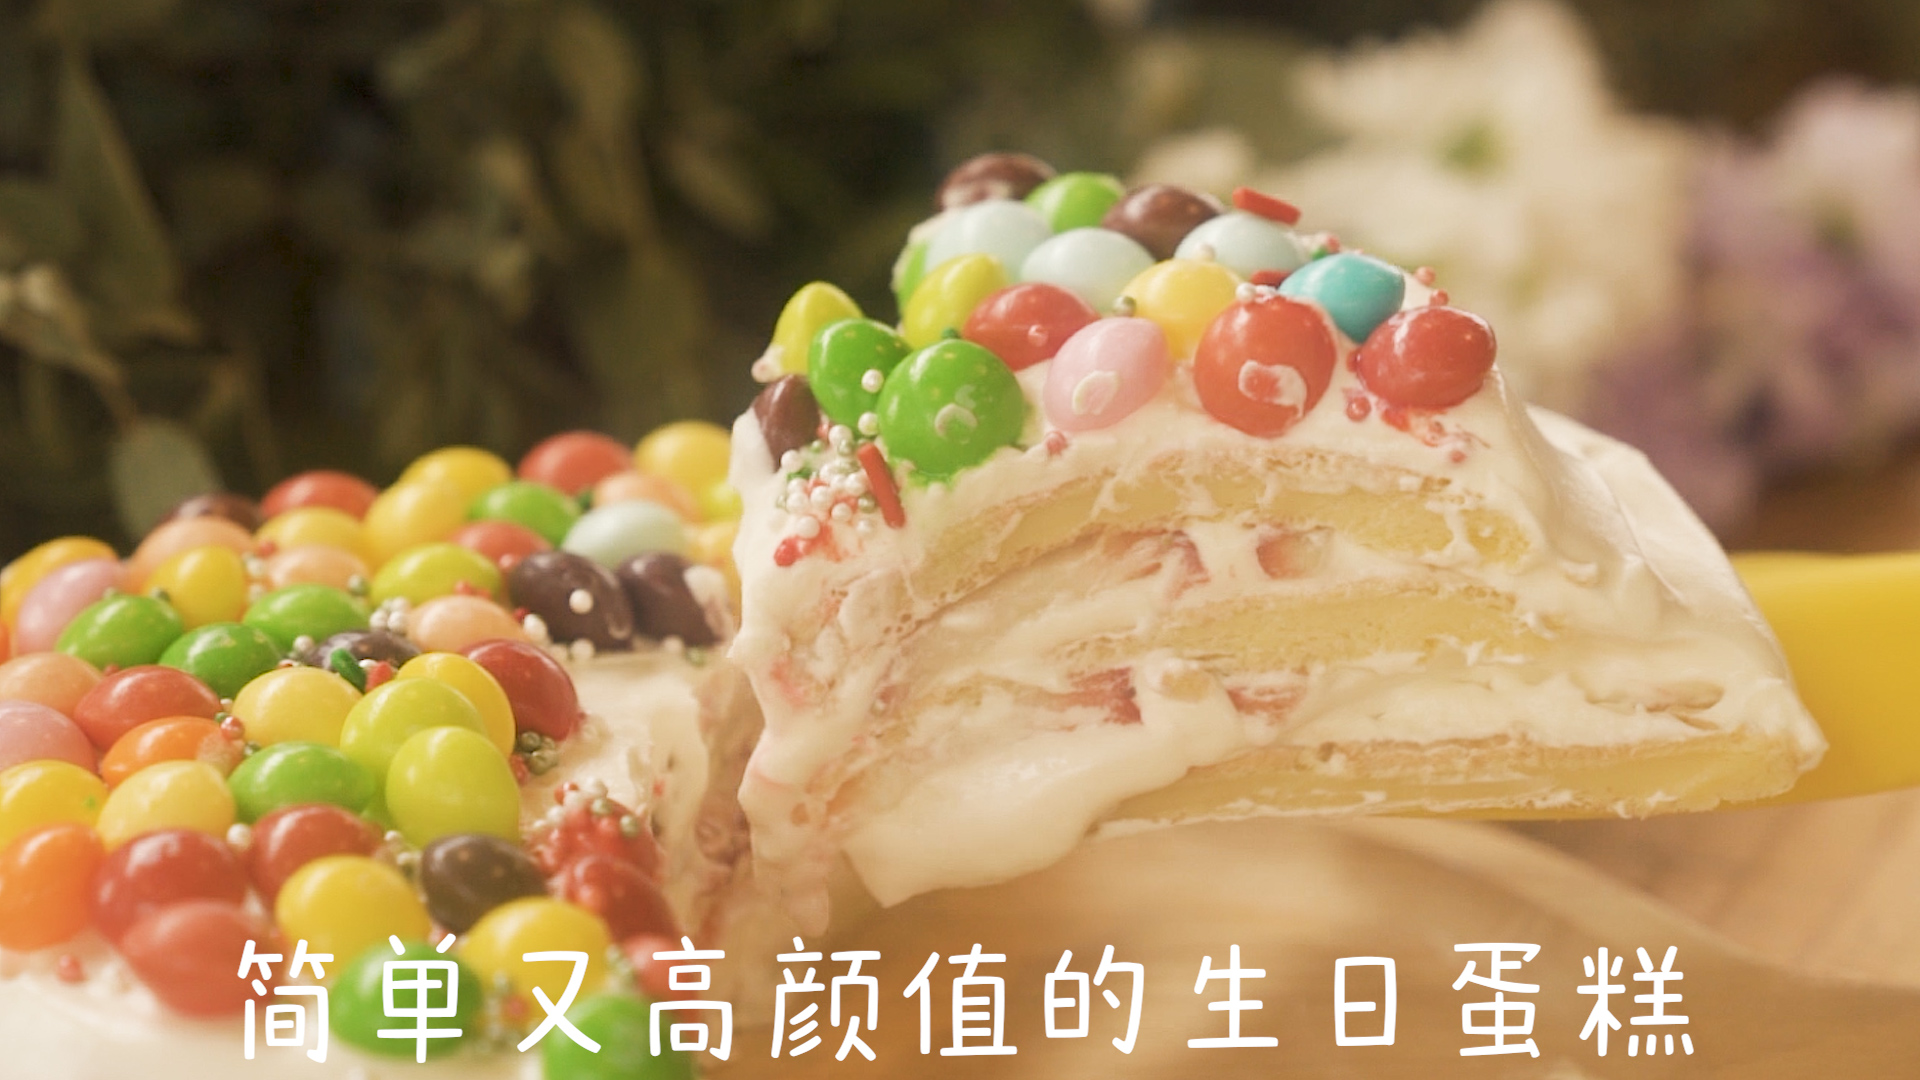 My Mum's Cake House: 孩子的生日蛋糕～彩虹蛋糕